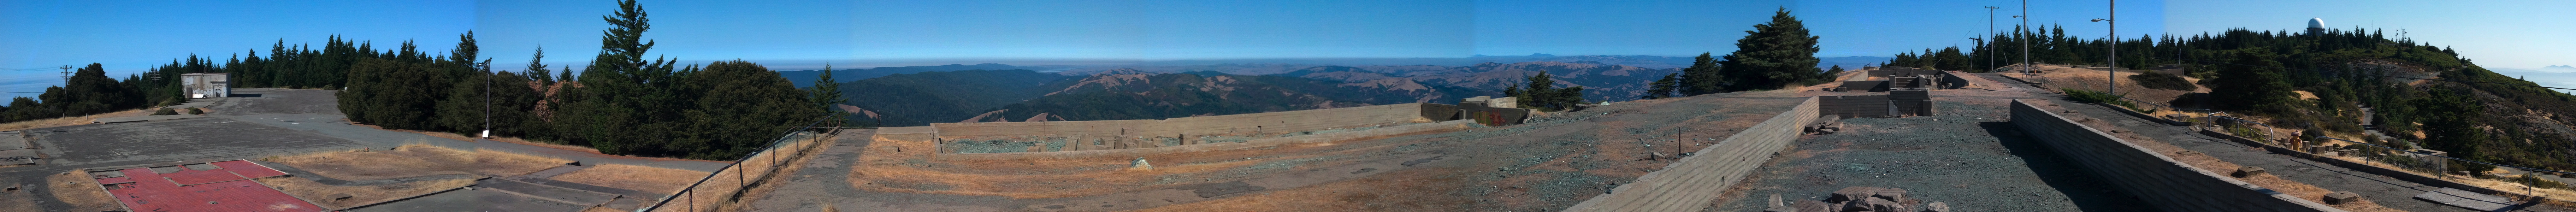 West Peak Panorama (200 degrees)